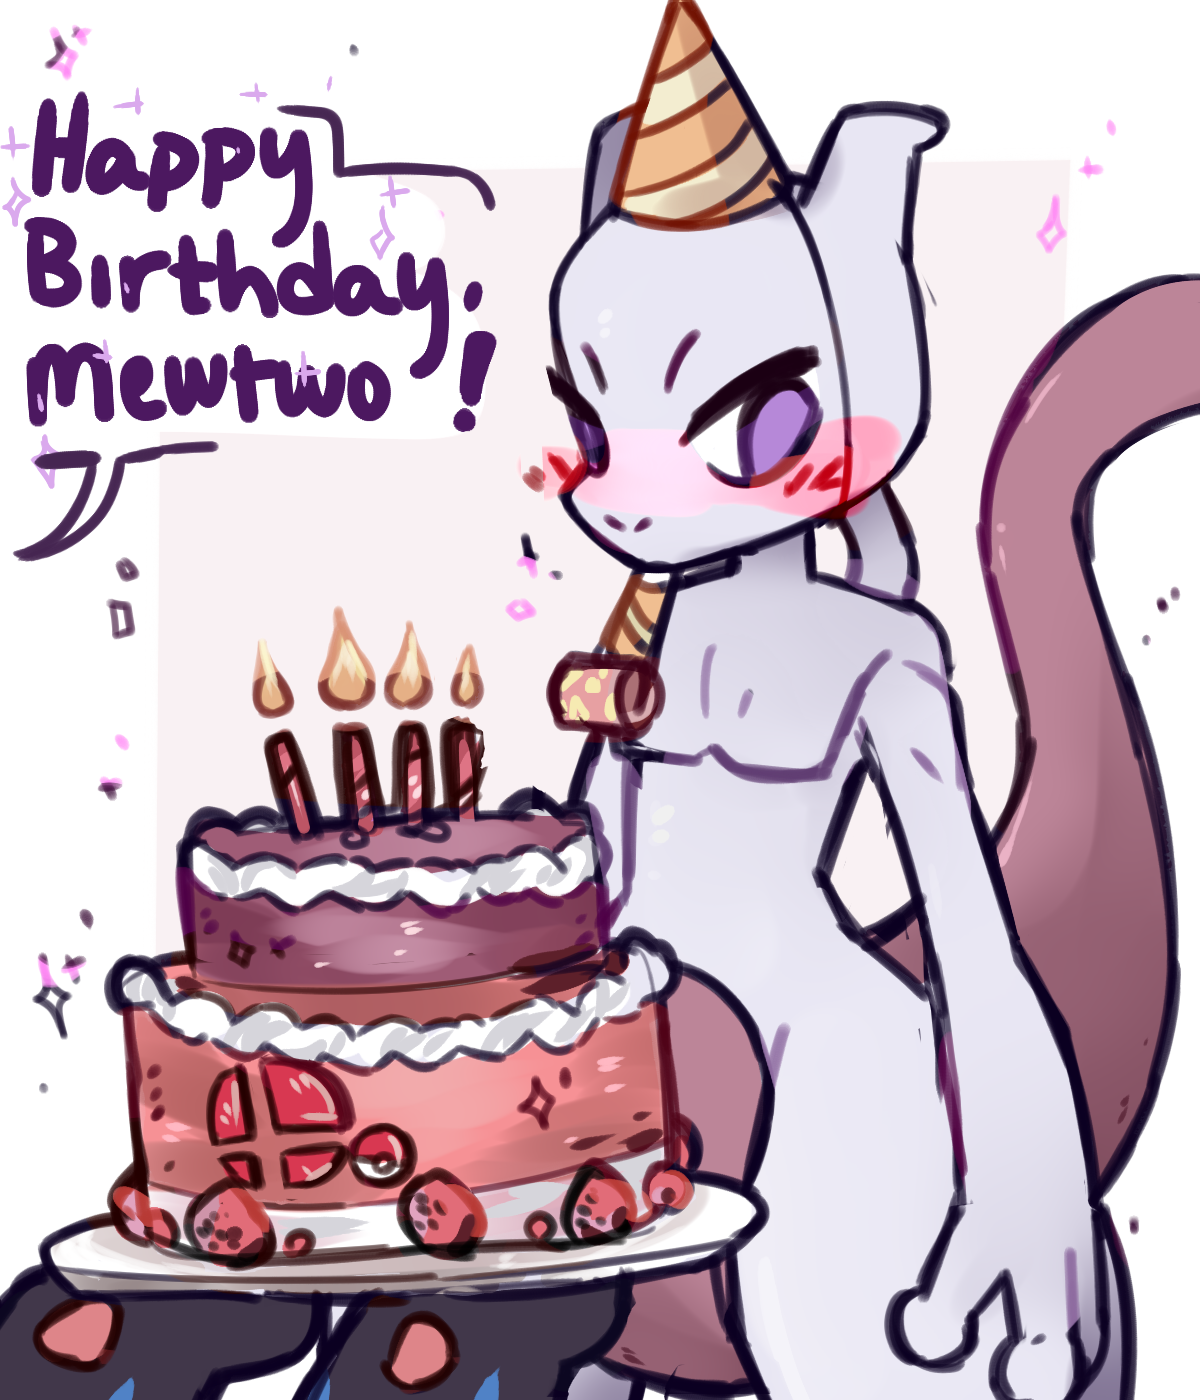 FVN News: Happy Birthday Mewtwo » MiscRave